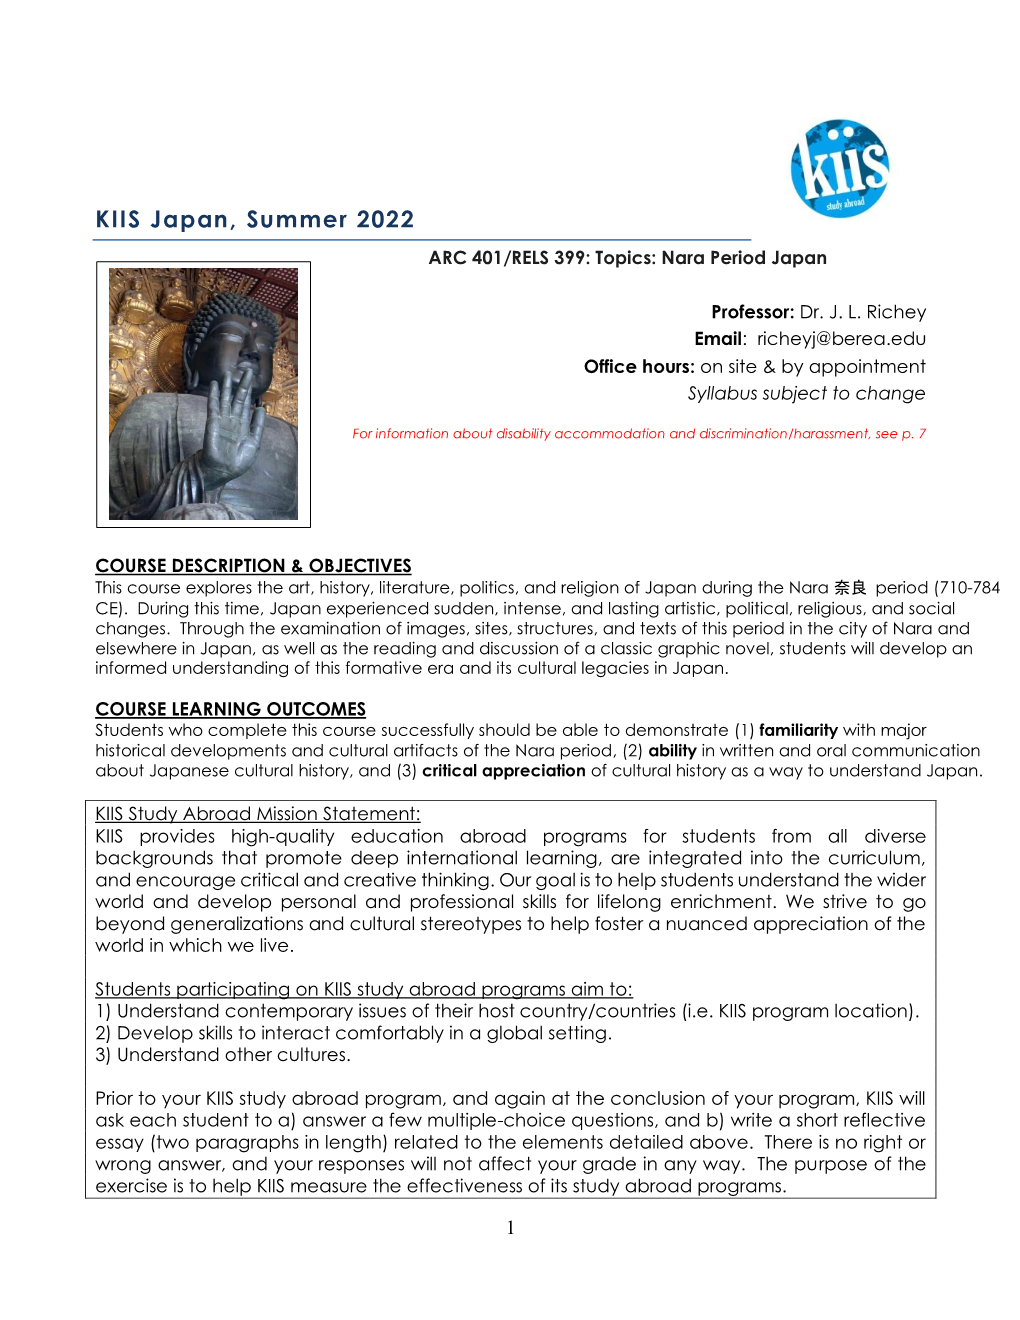 KIIS Japan, Summer 2022 ARC 401/RELS 399: Topics: Nara Period Japan